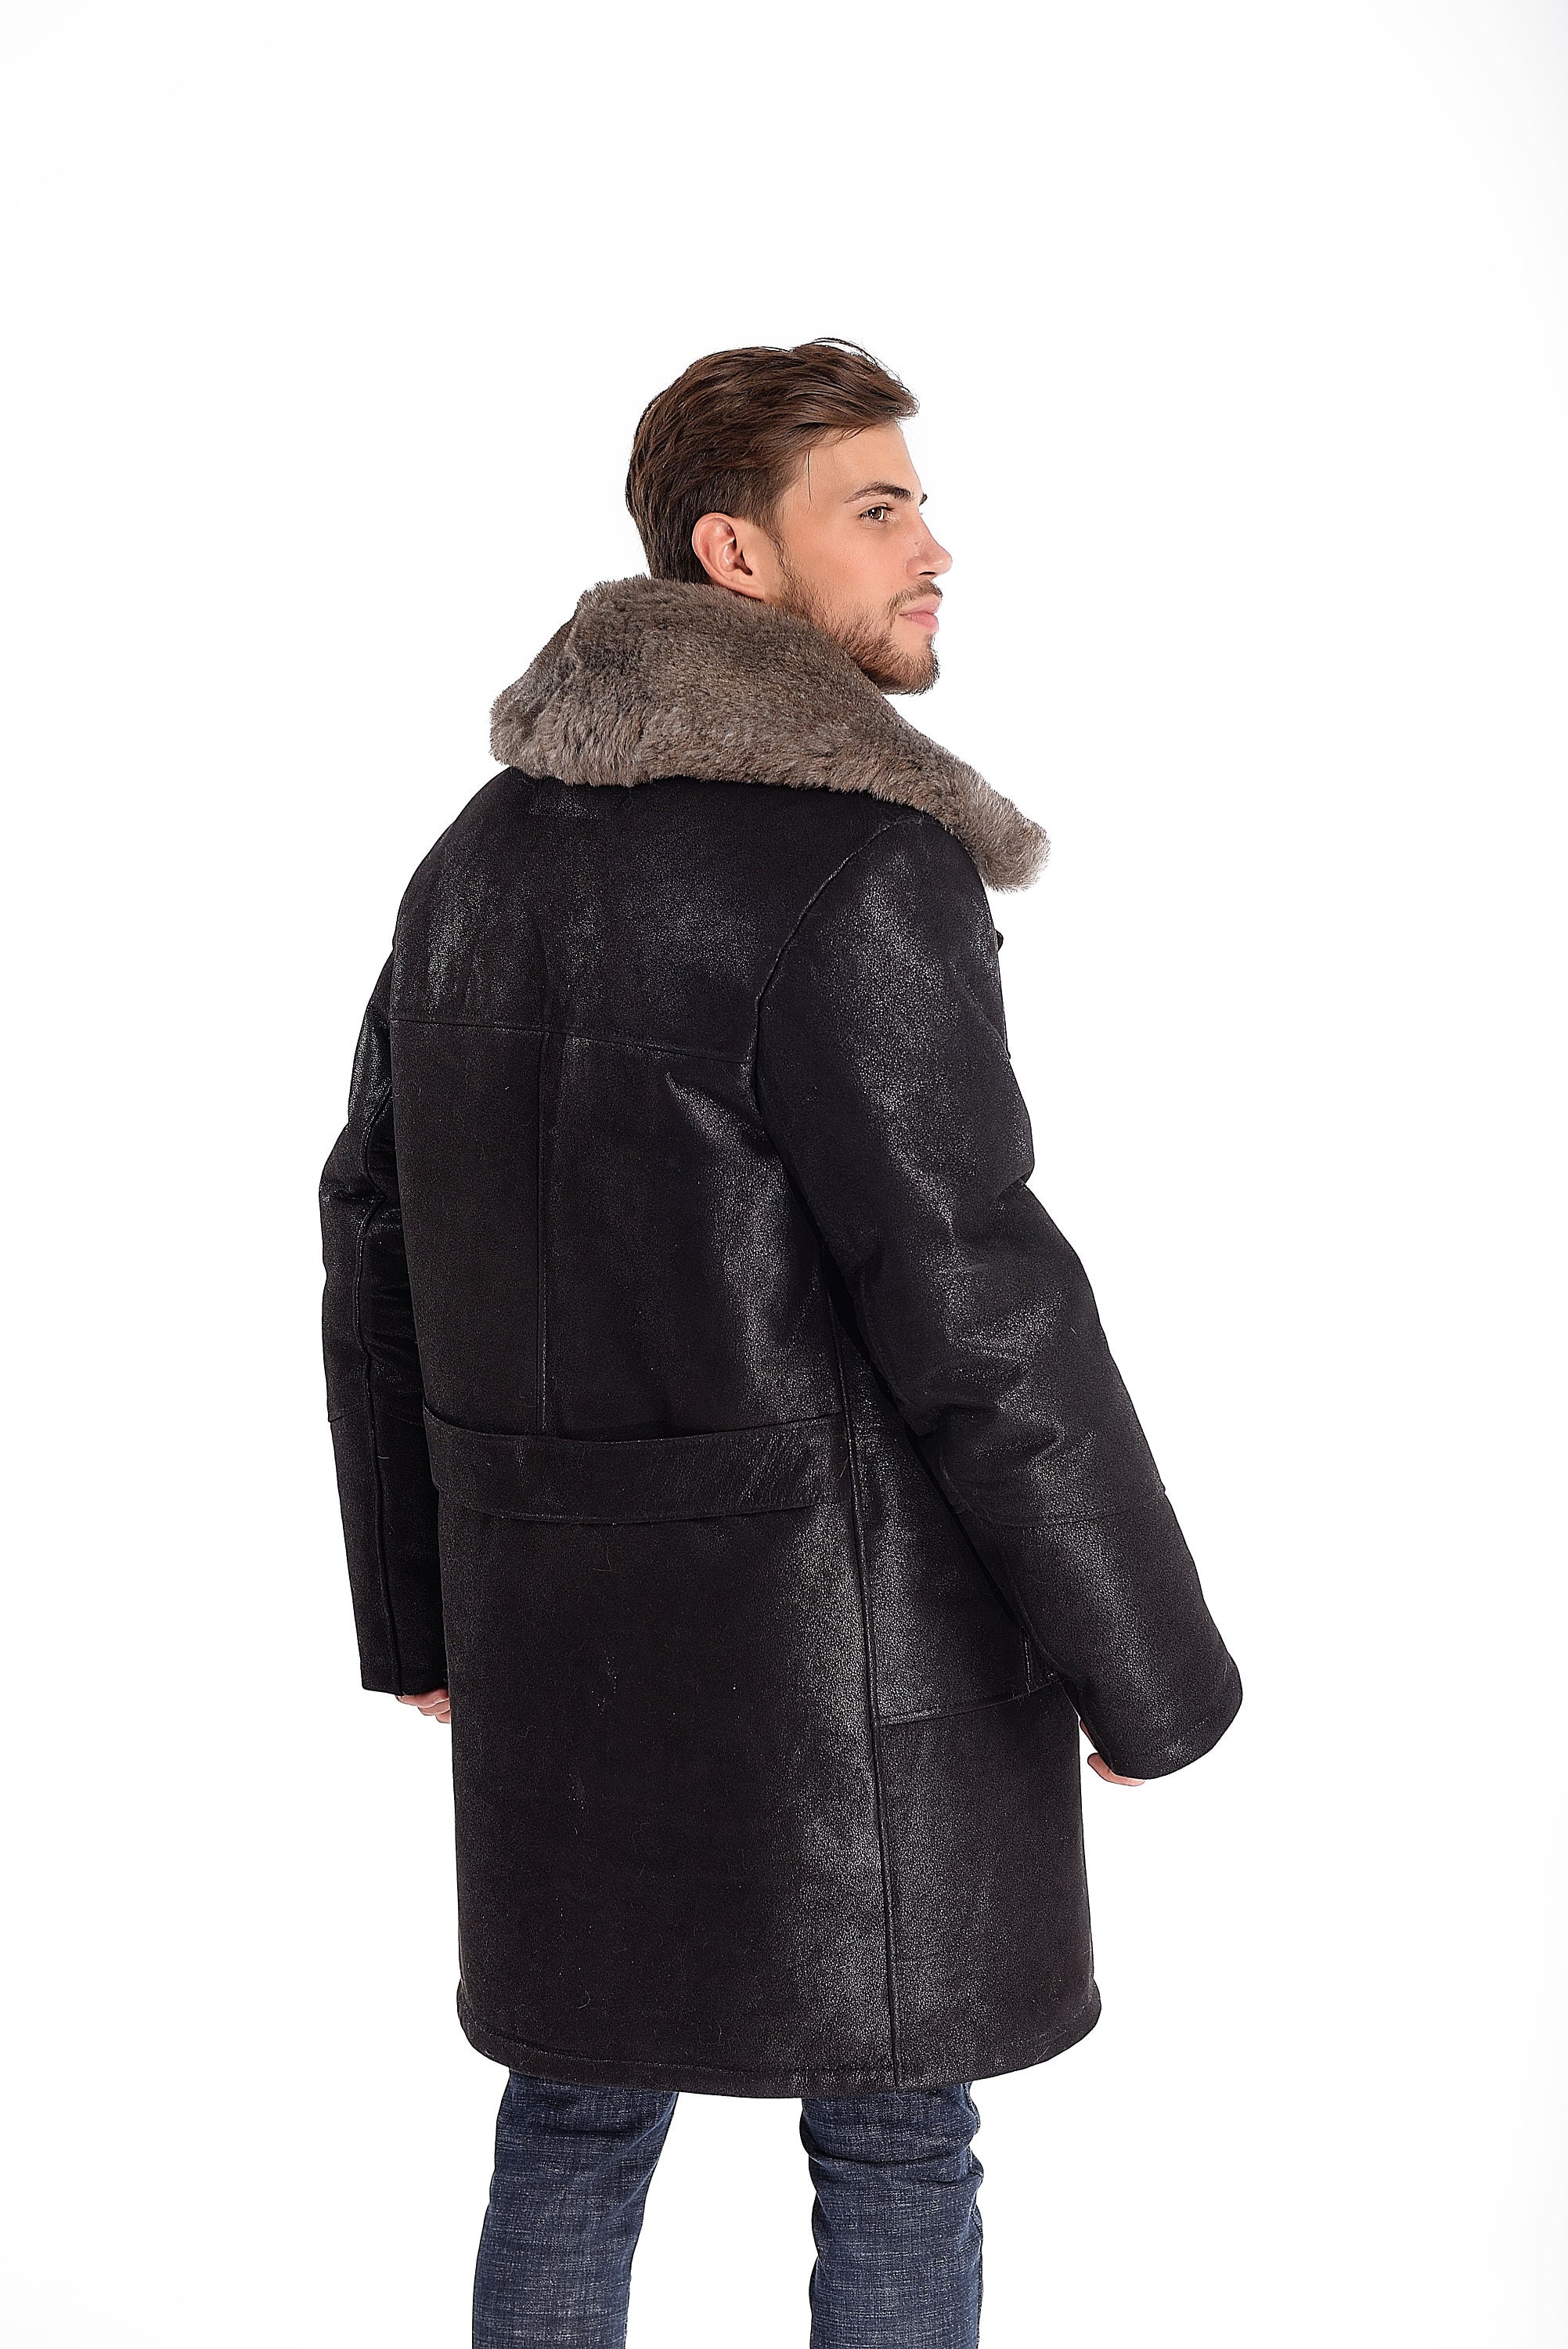 Men's Long Shearling Sheepskin Coat With Wide Grey Fur Collar - Etsy